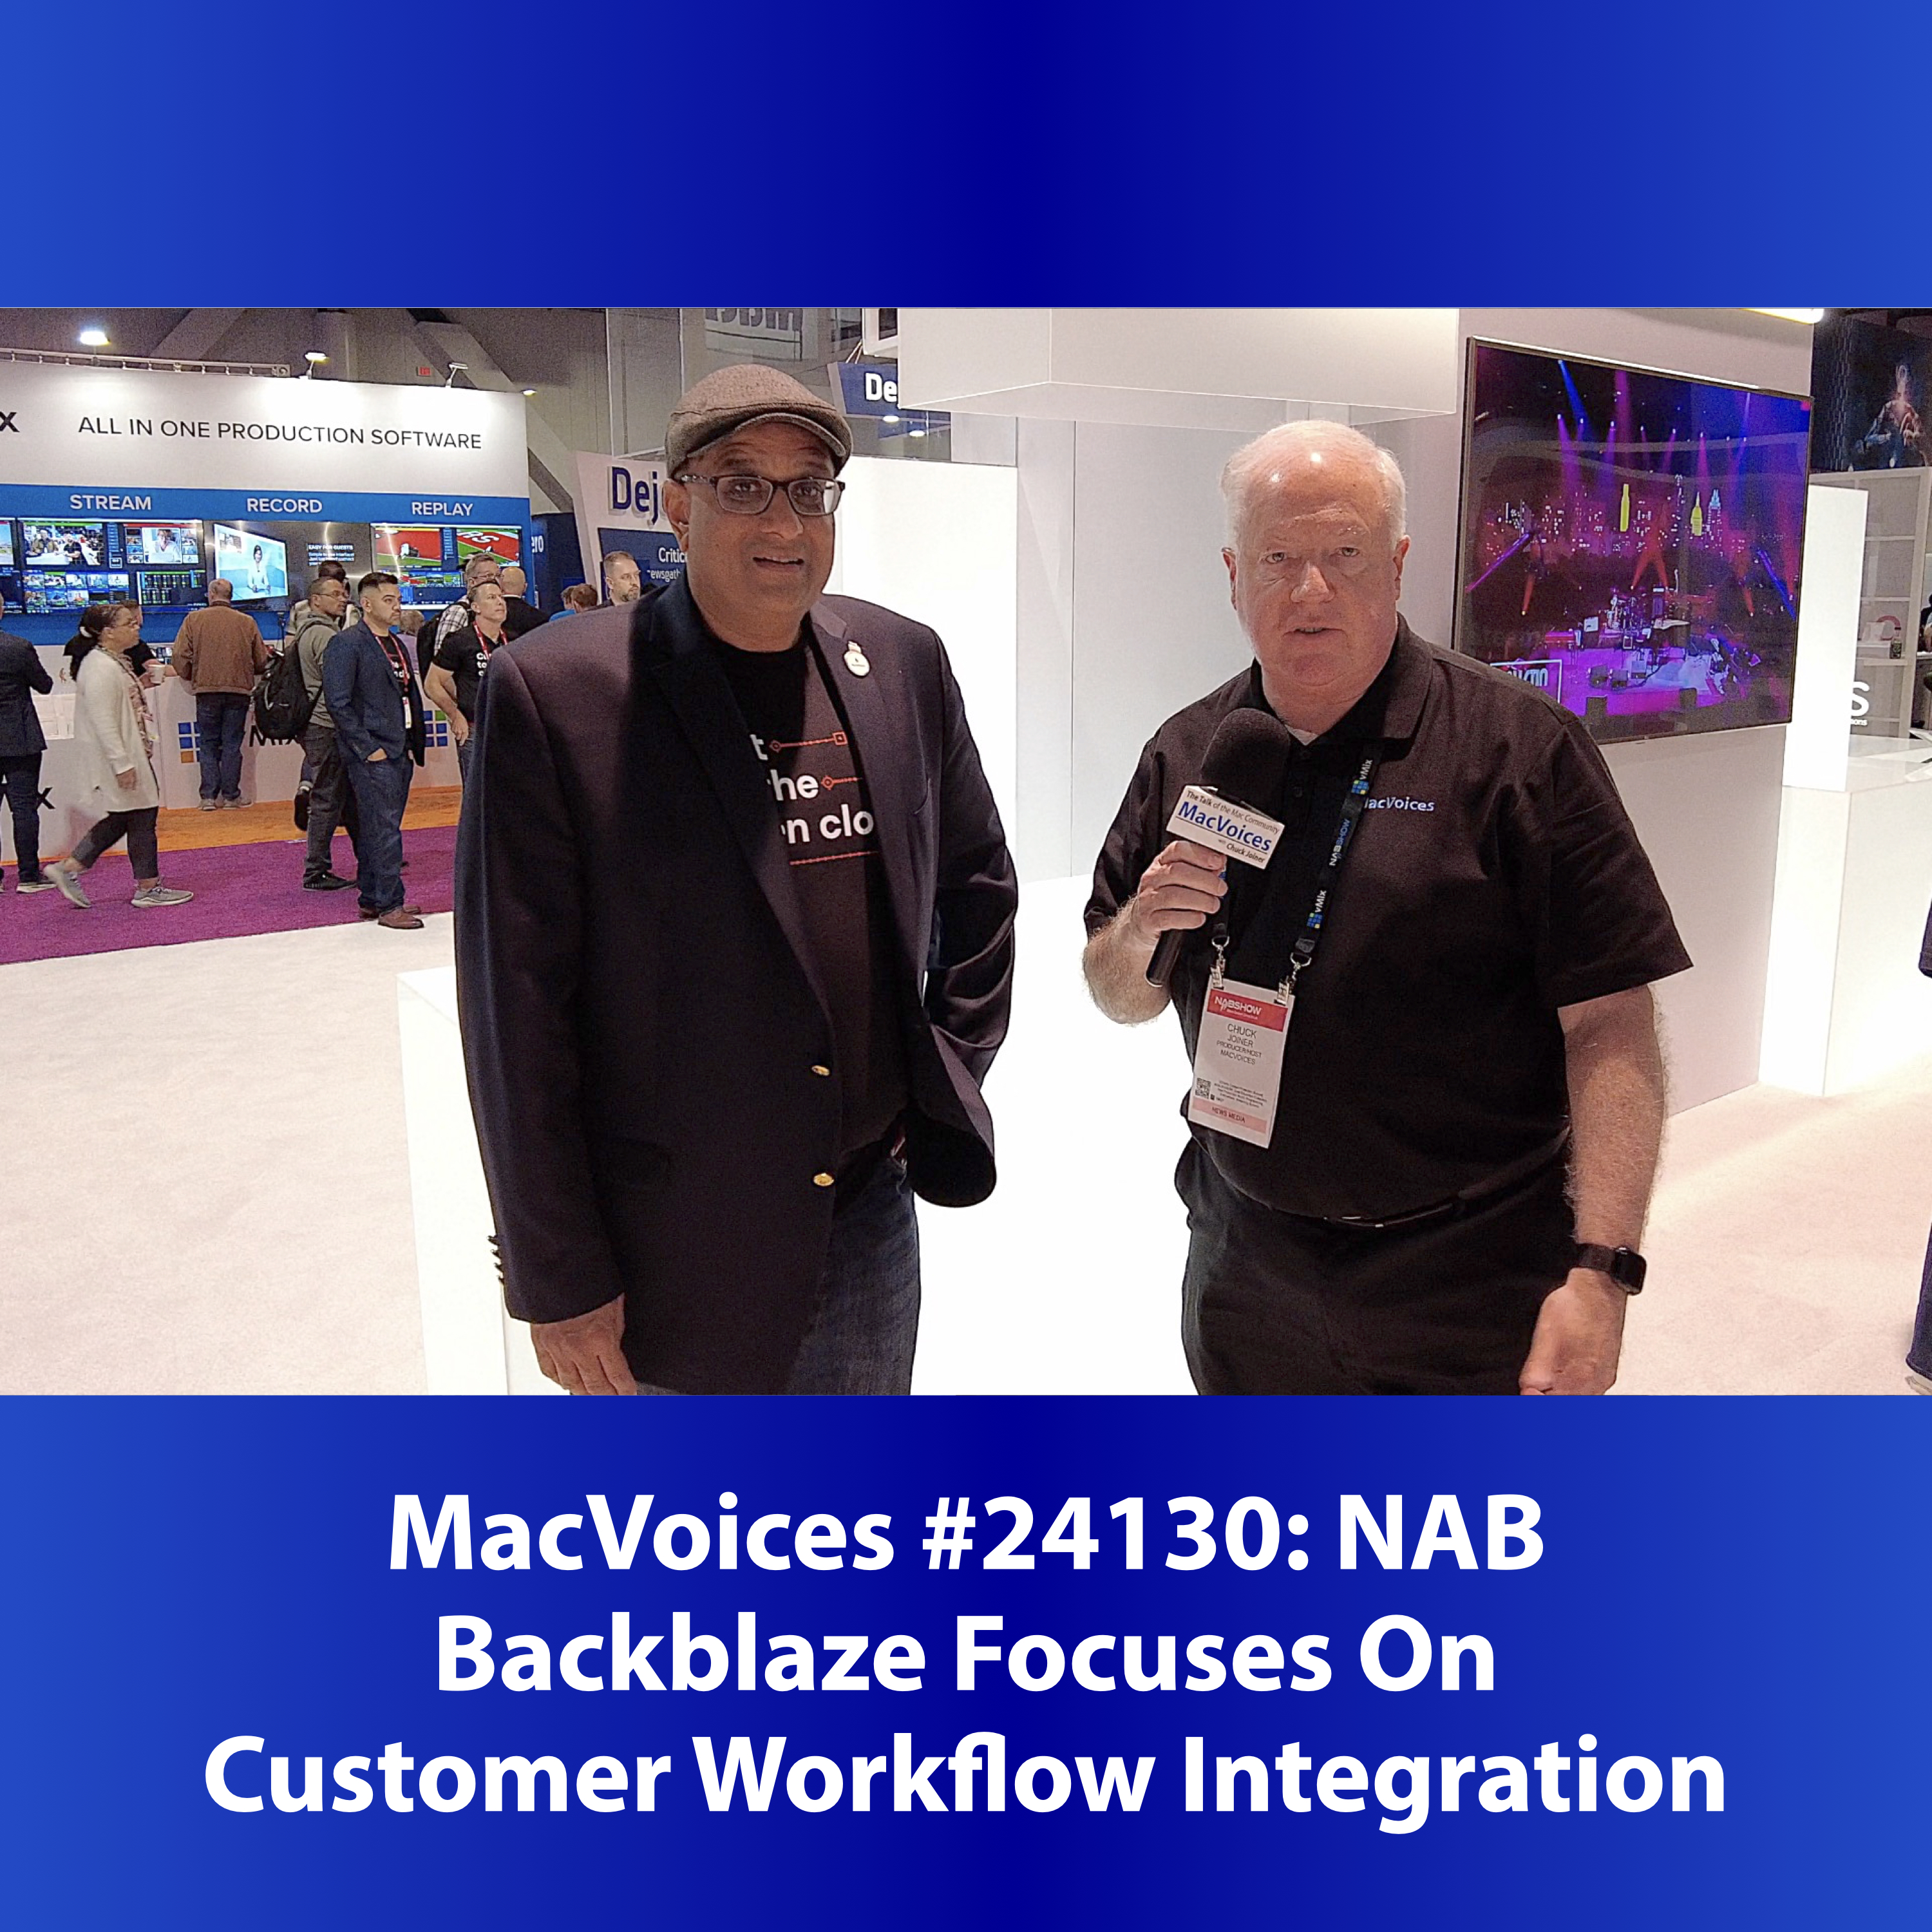 MacVoices #24130: NAB - Backblaze Focuses On Customer Workflow Integration